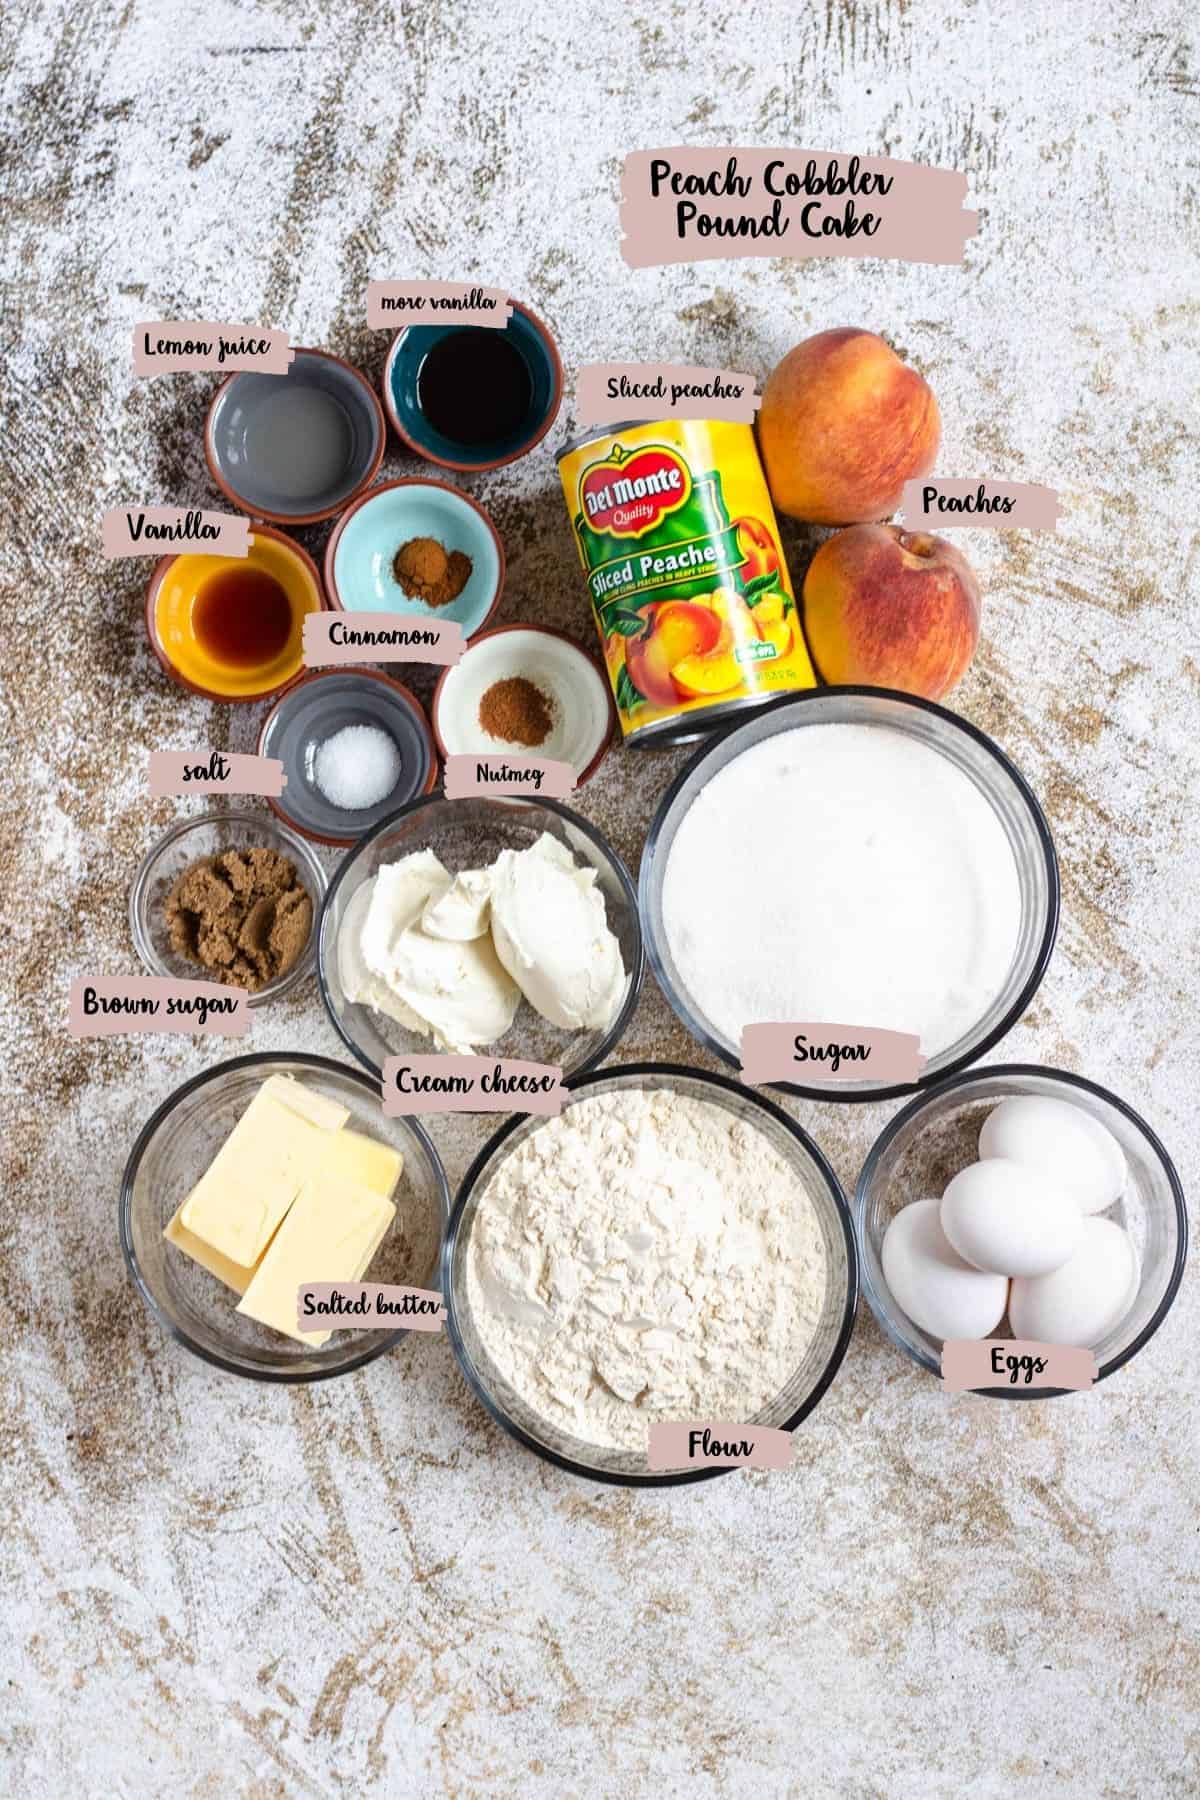 Measured ingredients to make peach cobbler pound cake. 